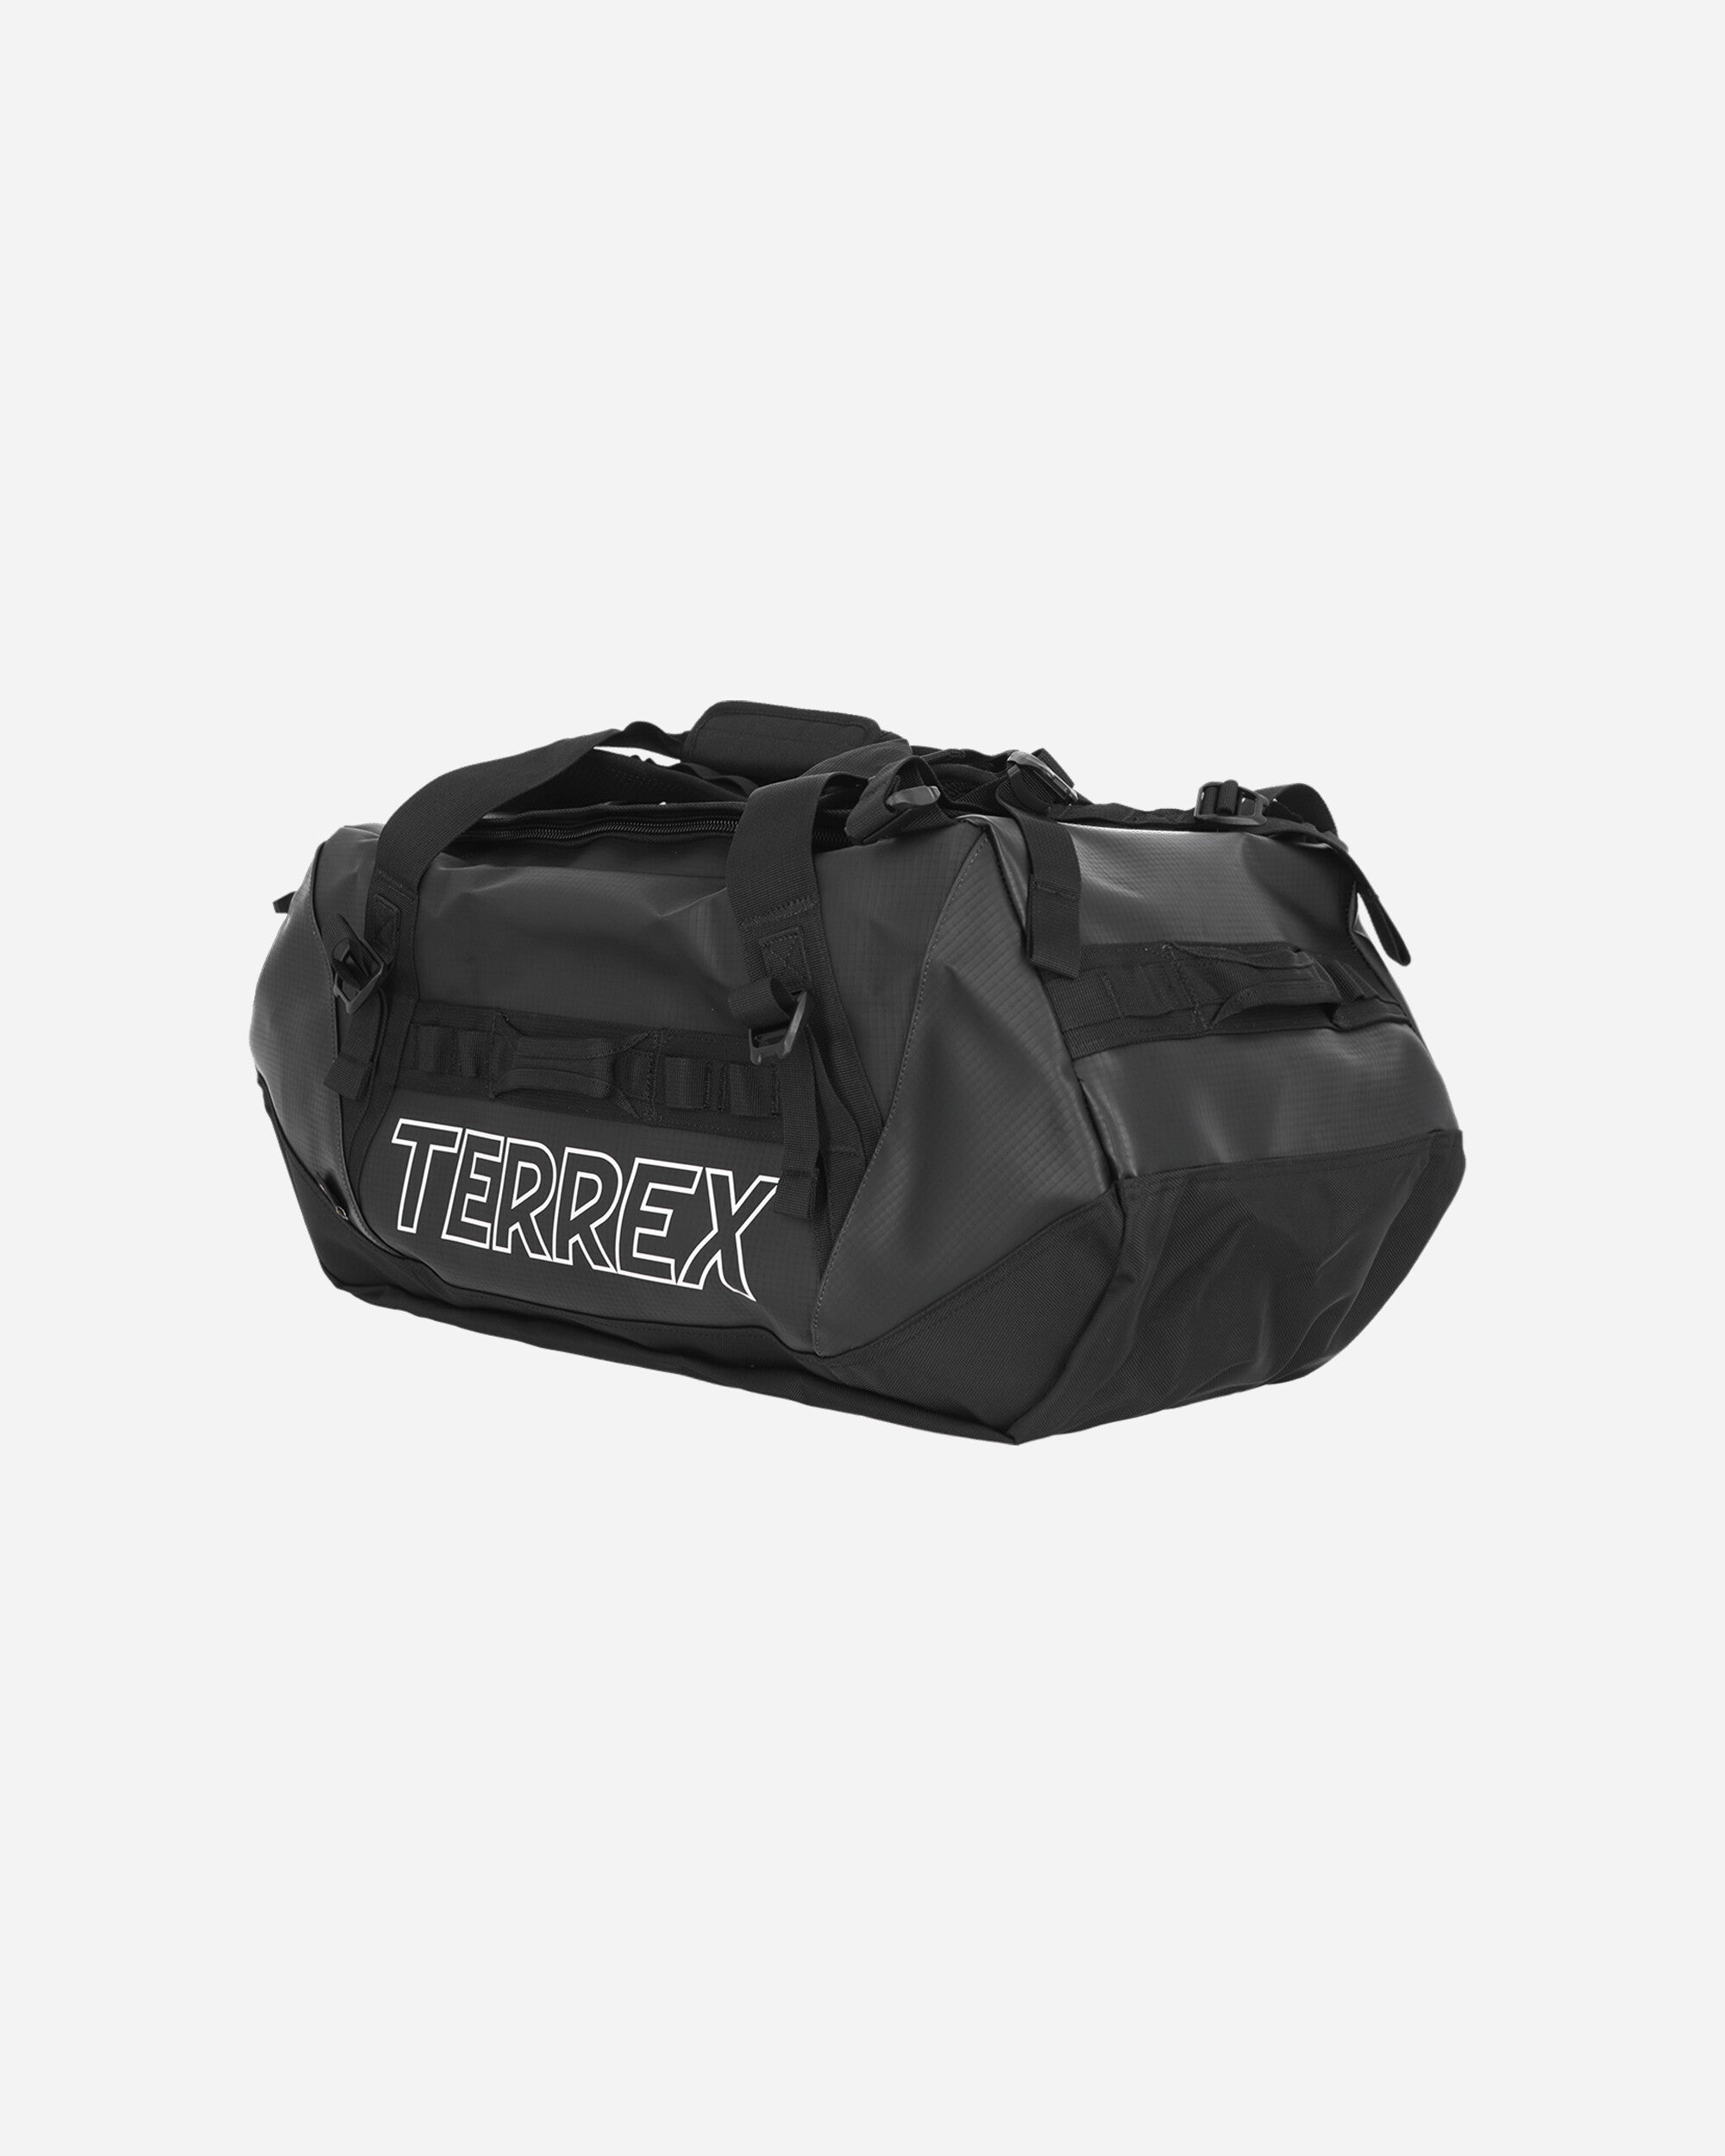 TERREX Expedition Duffel Bag Medium Black